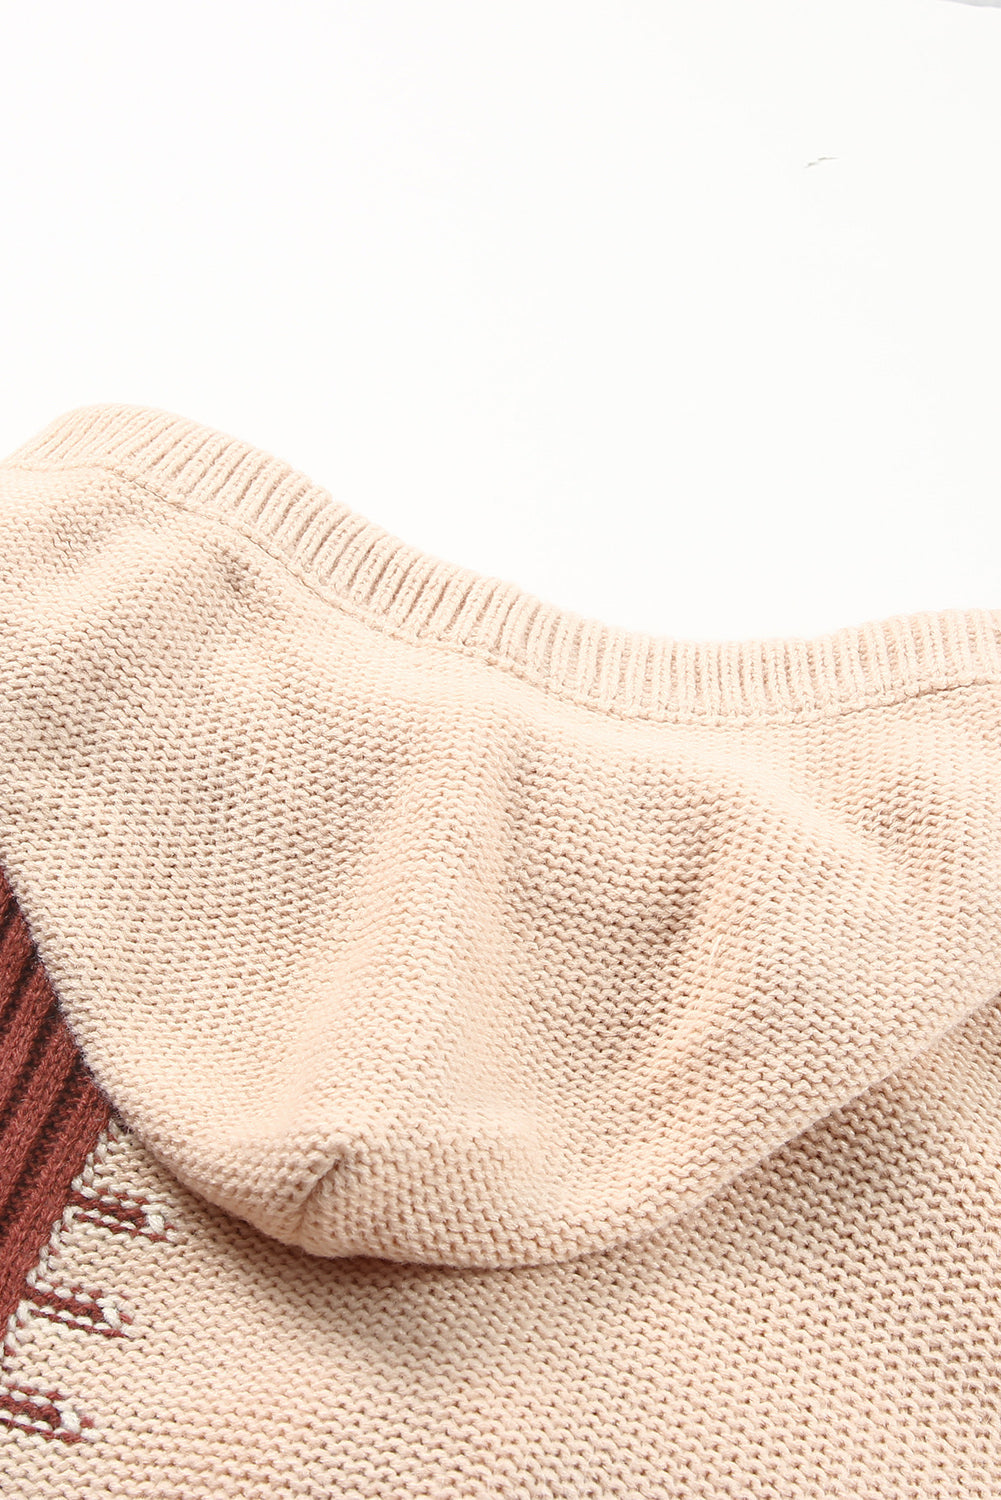 Khaki Color Block V-Neck Long Sleeve Relaxed Sweater